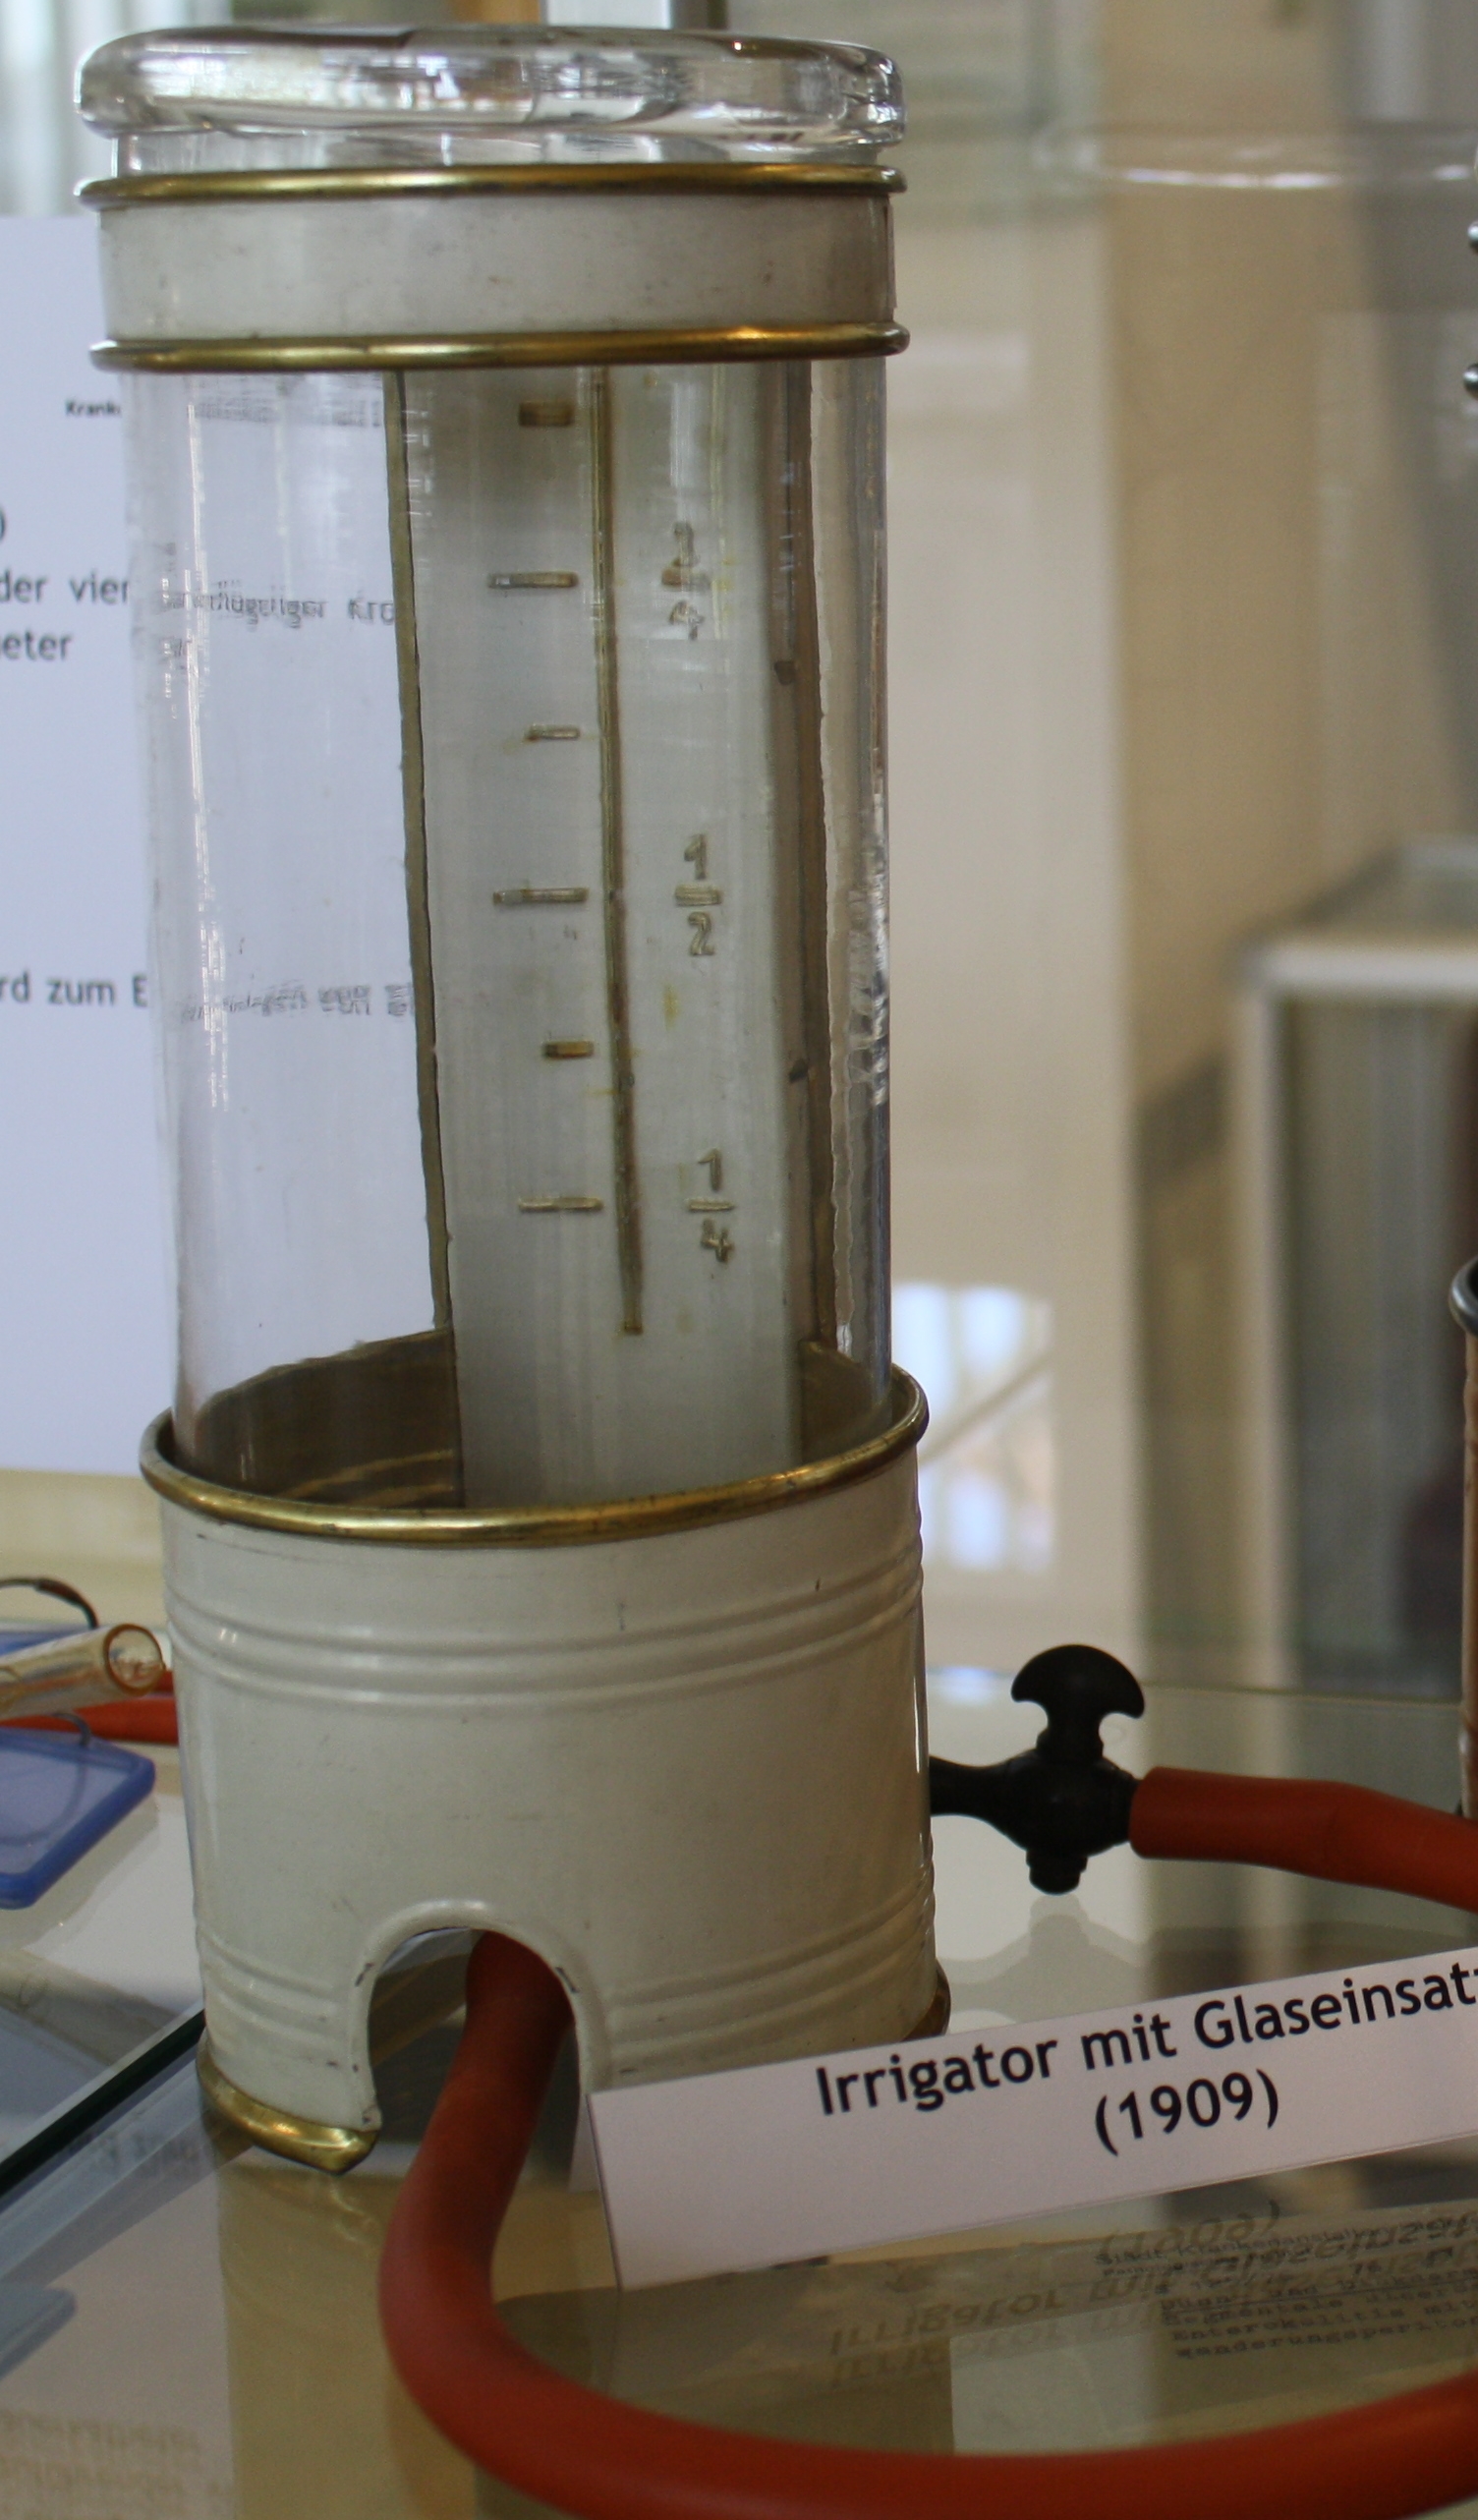 Irrigator mit Glaseinsatz (Krankenhausmuseum Bielefeld CC BY-NC-SA)